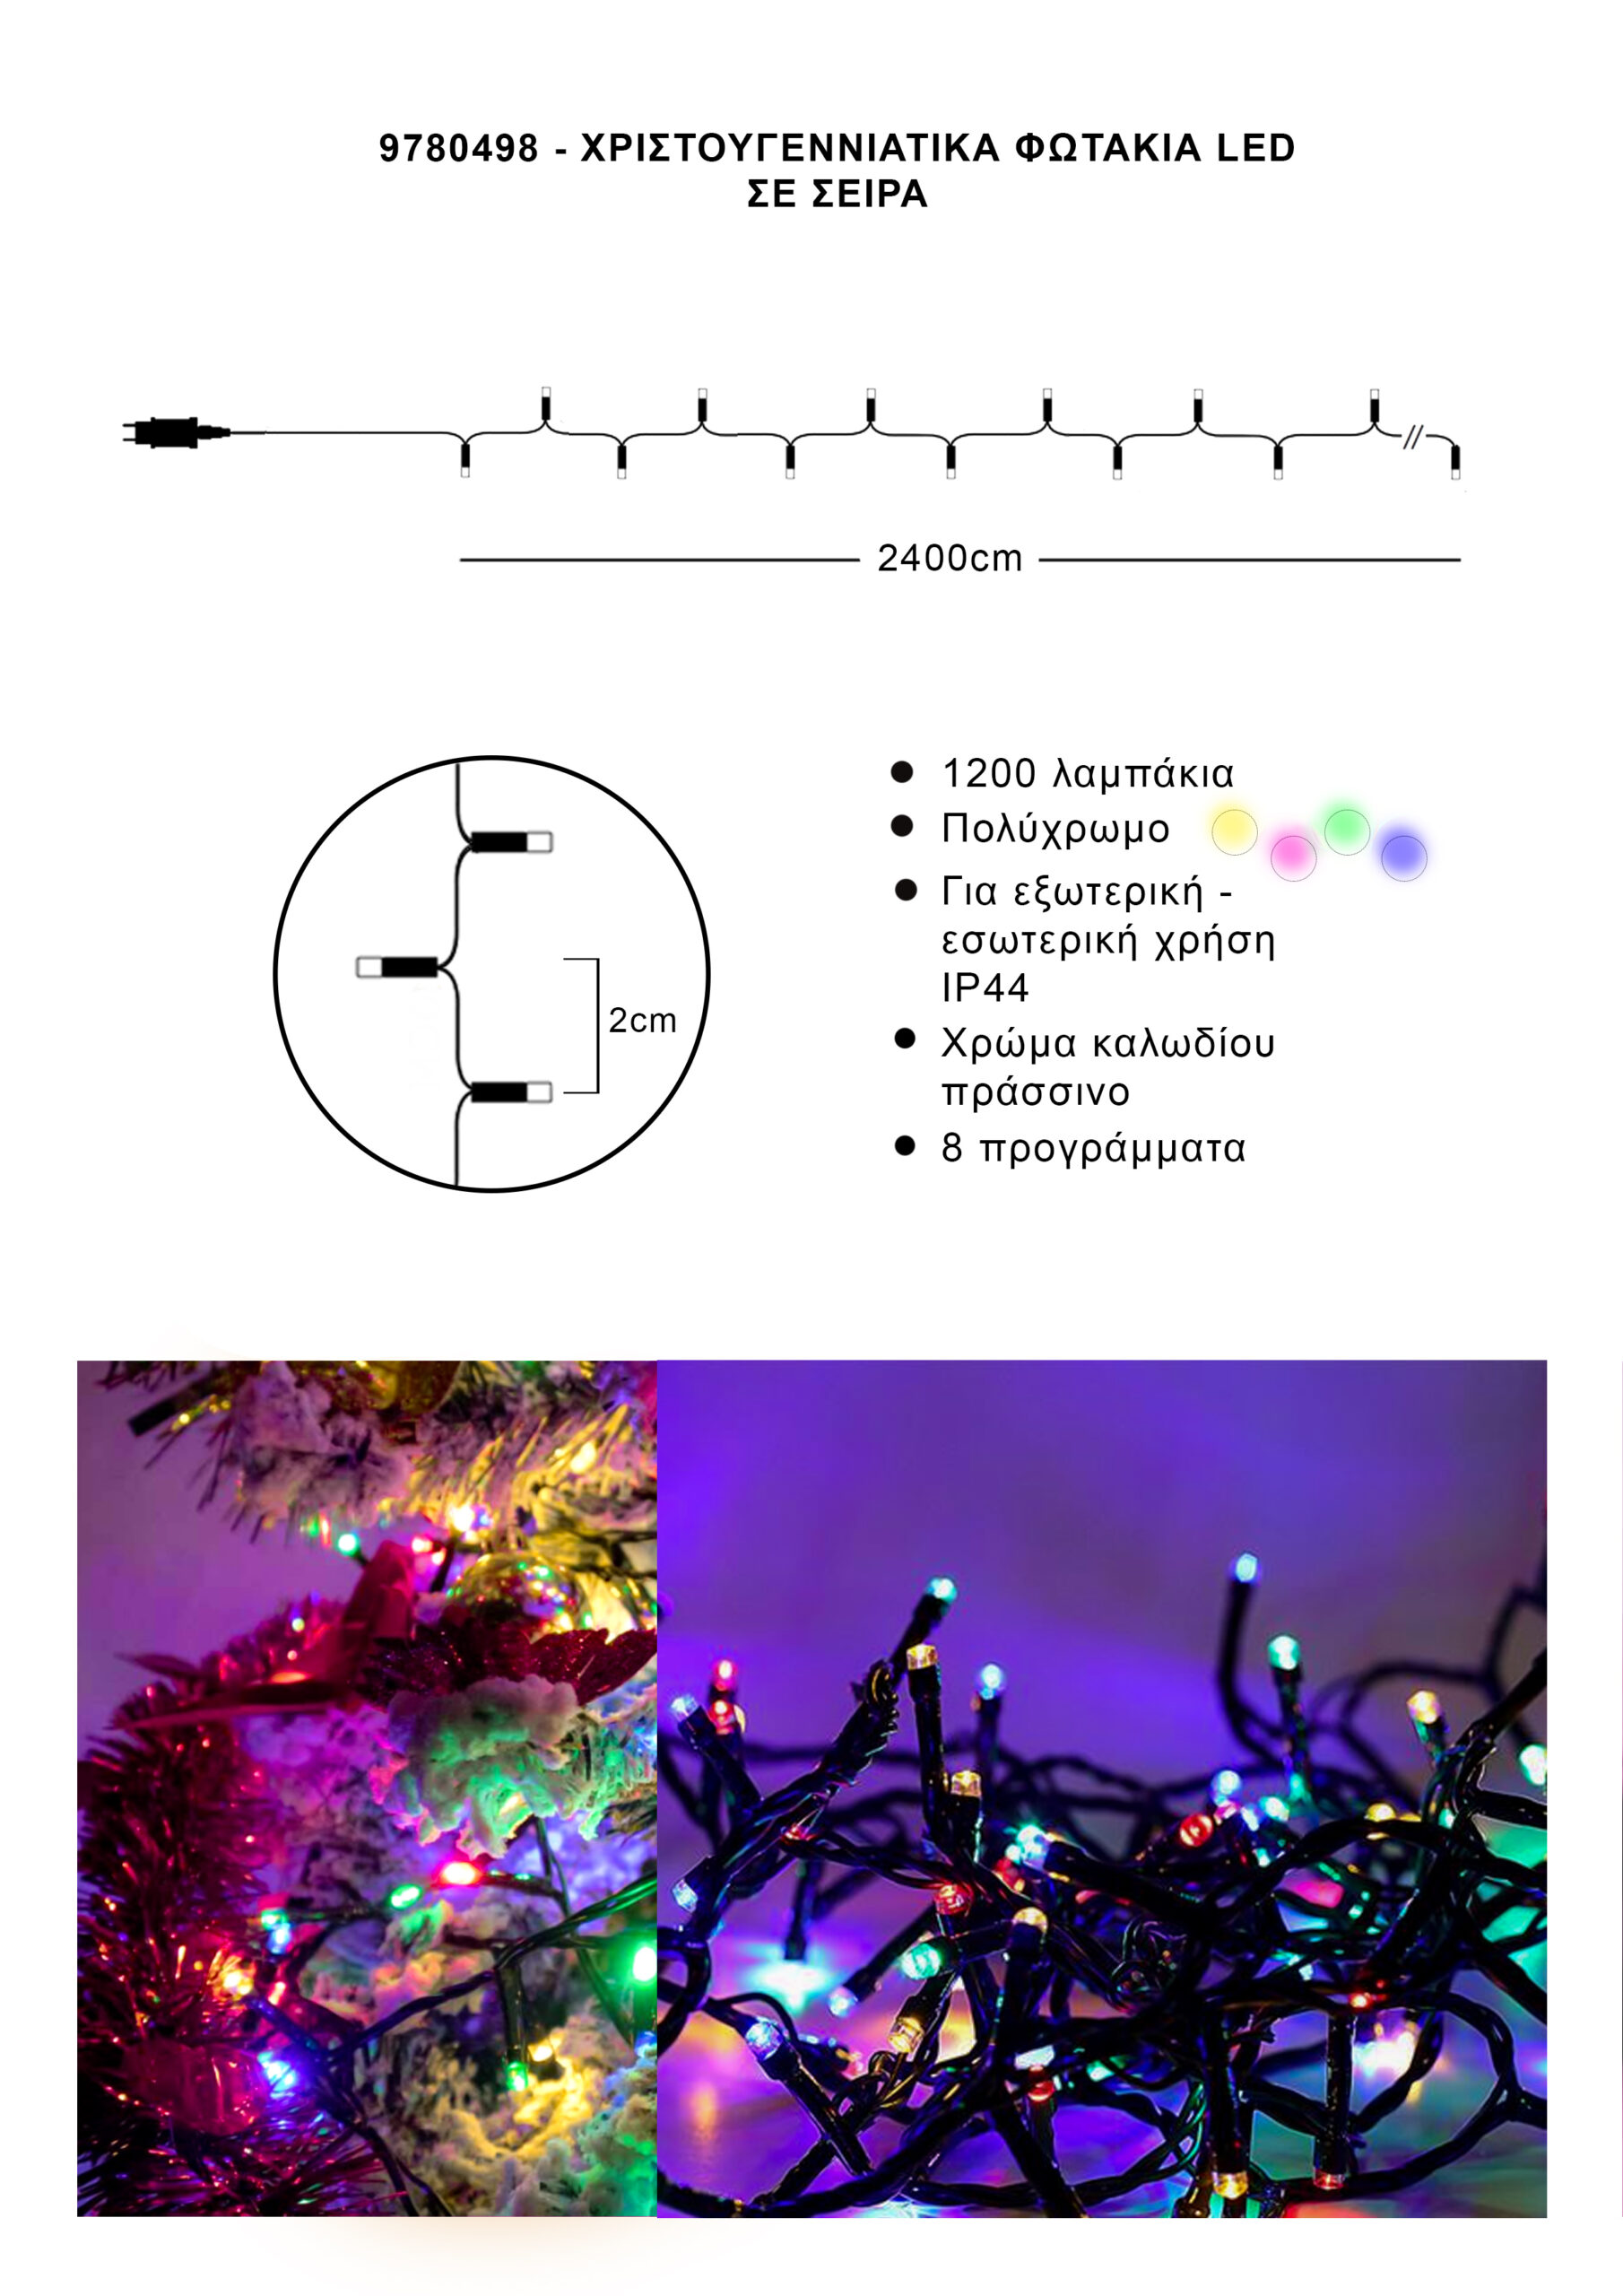 Athome Pavloudakis - Χριστουγεννιάτικα φωτάκια σε σειρά 1200 LED πολύχρωμο με πρόγραμμα μ 2400 cm